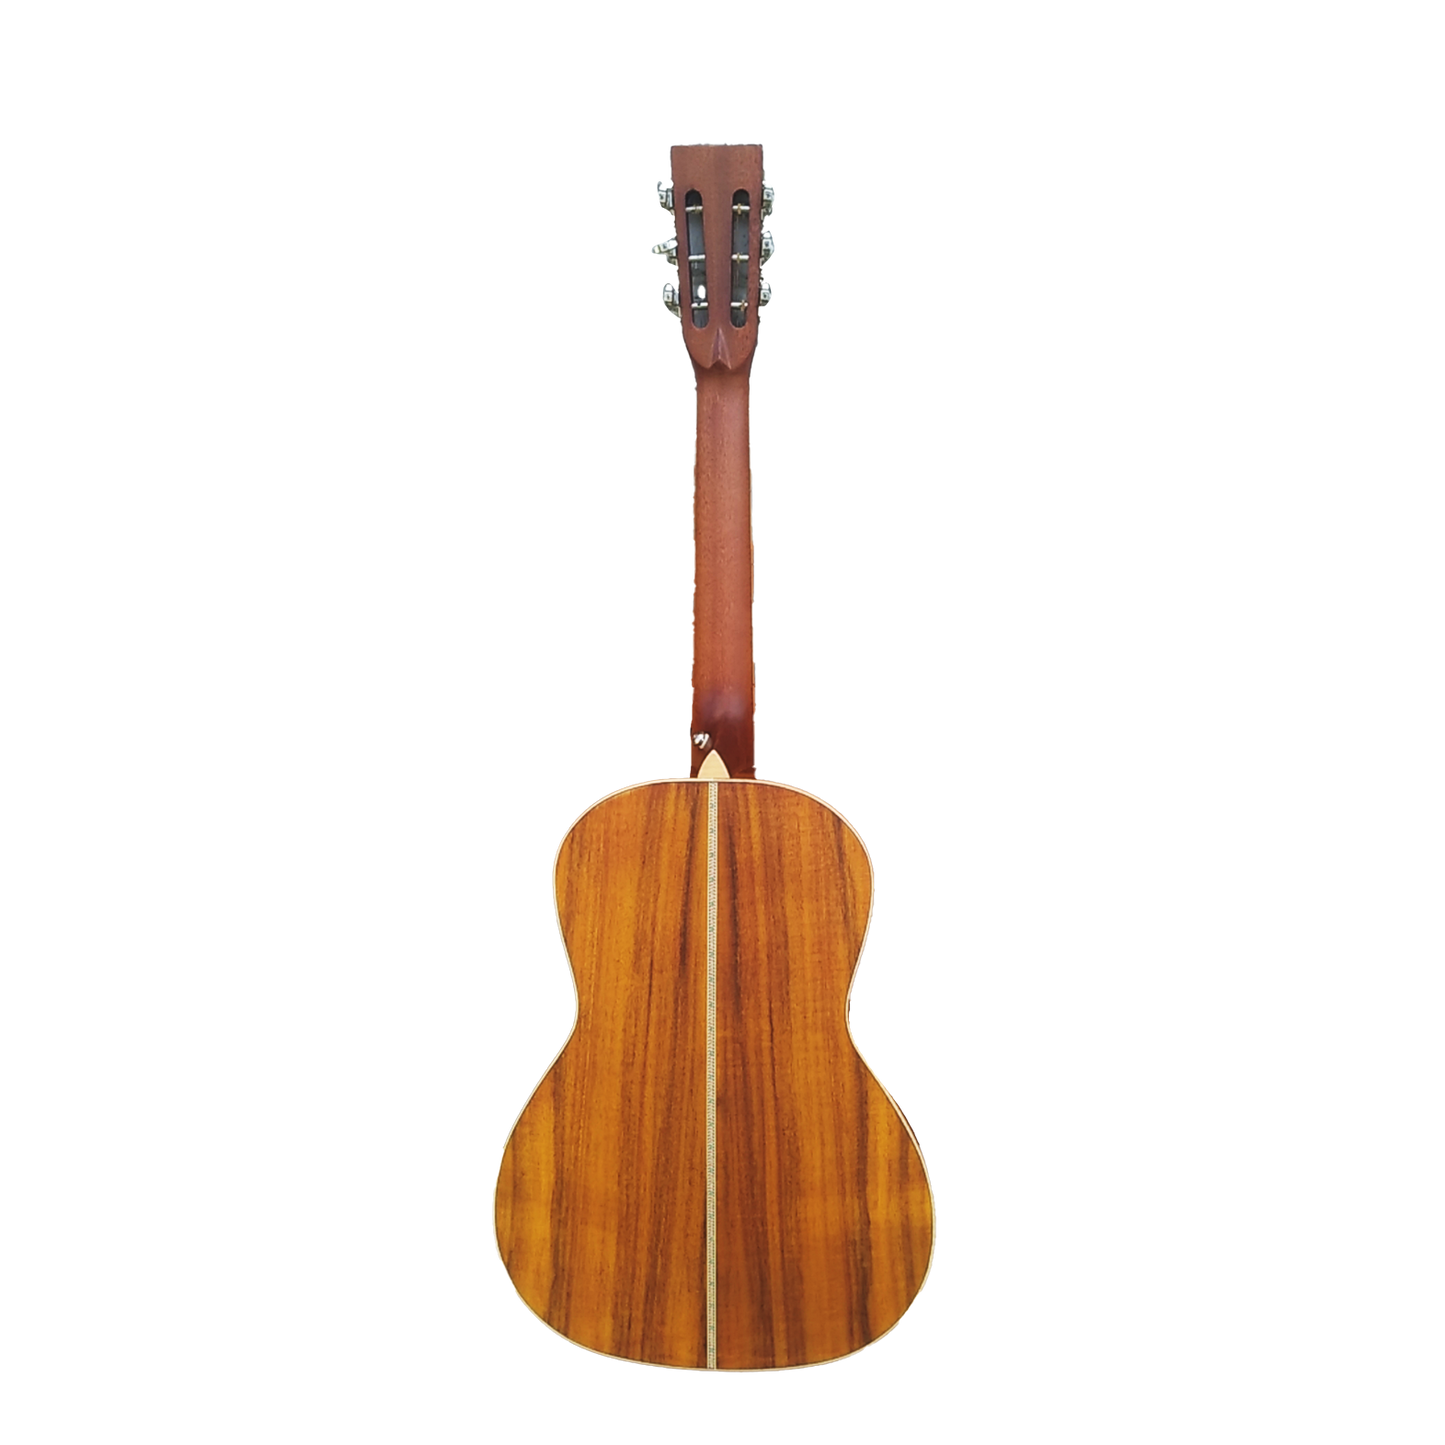 All Solid Koa Wood Guitar Handmade OOO Size the OOO28 acoustic electric guitar